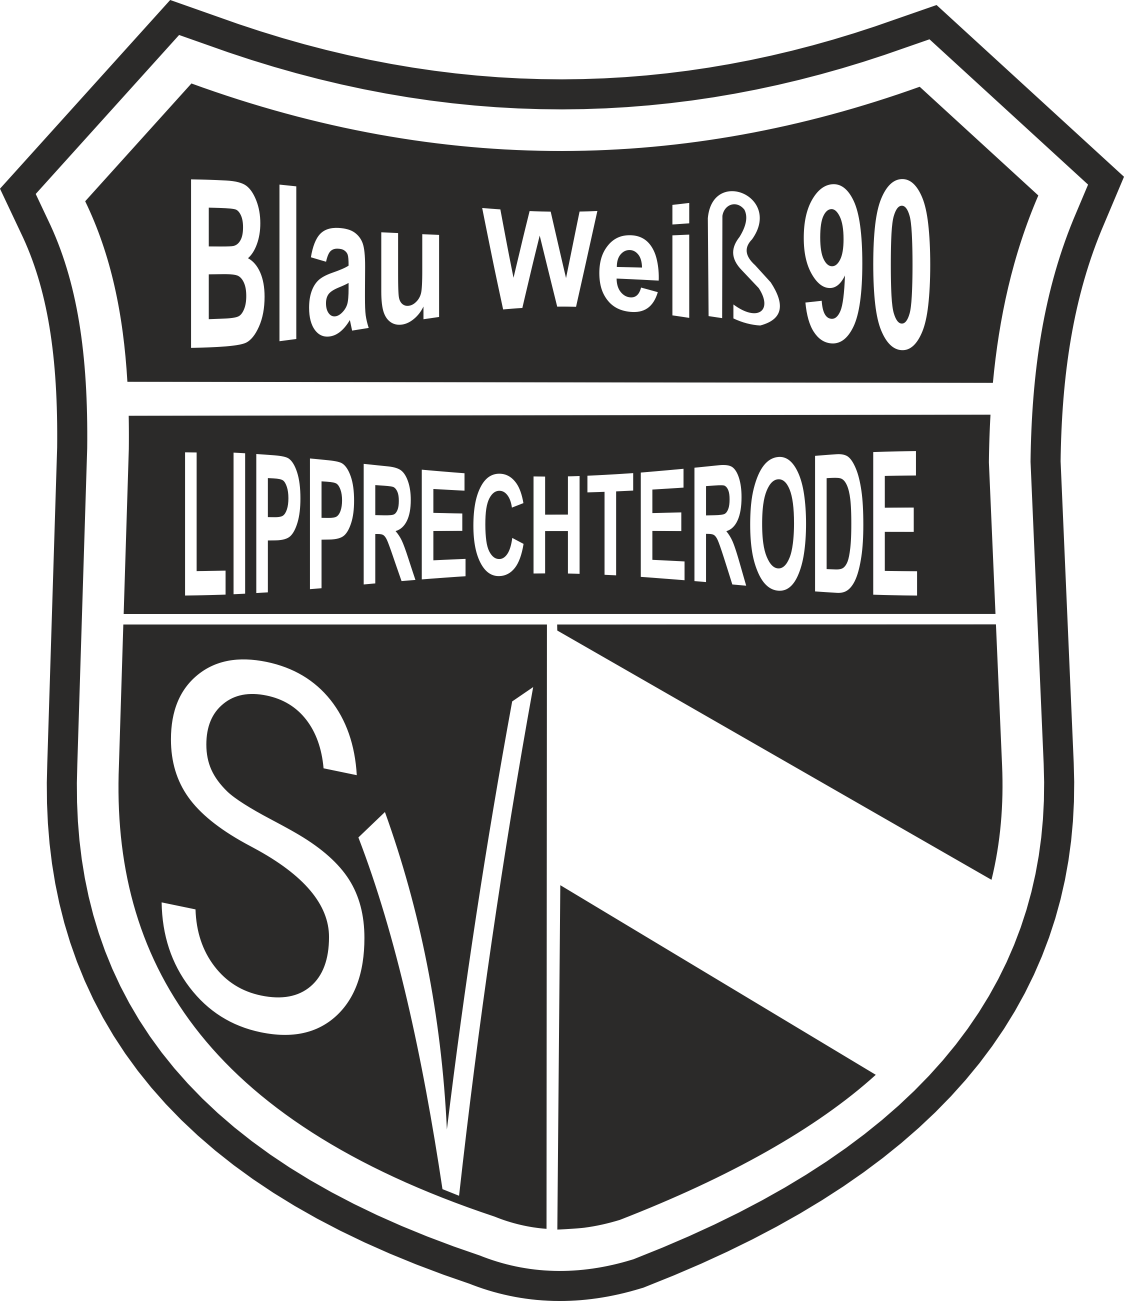 SV Blau-Weiß 90 Lipprechterode e.V. Logo